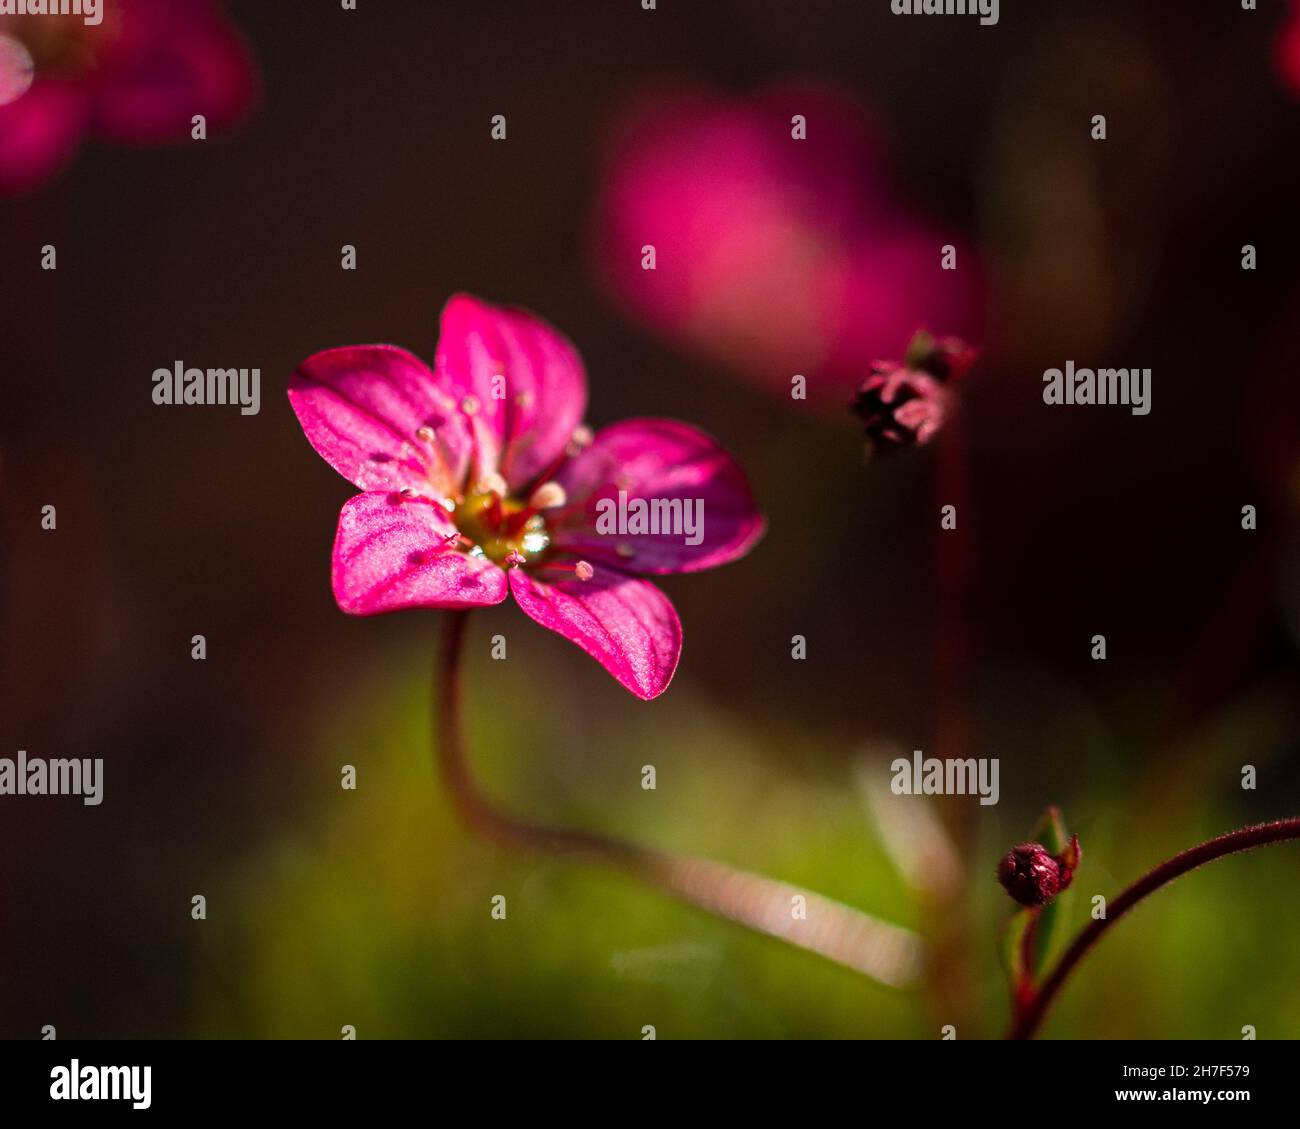 Purple Irish saxifrage flower in the blurred background Stock Photo